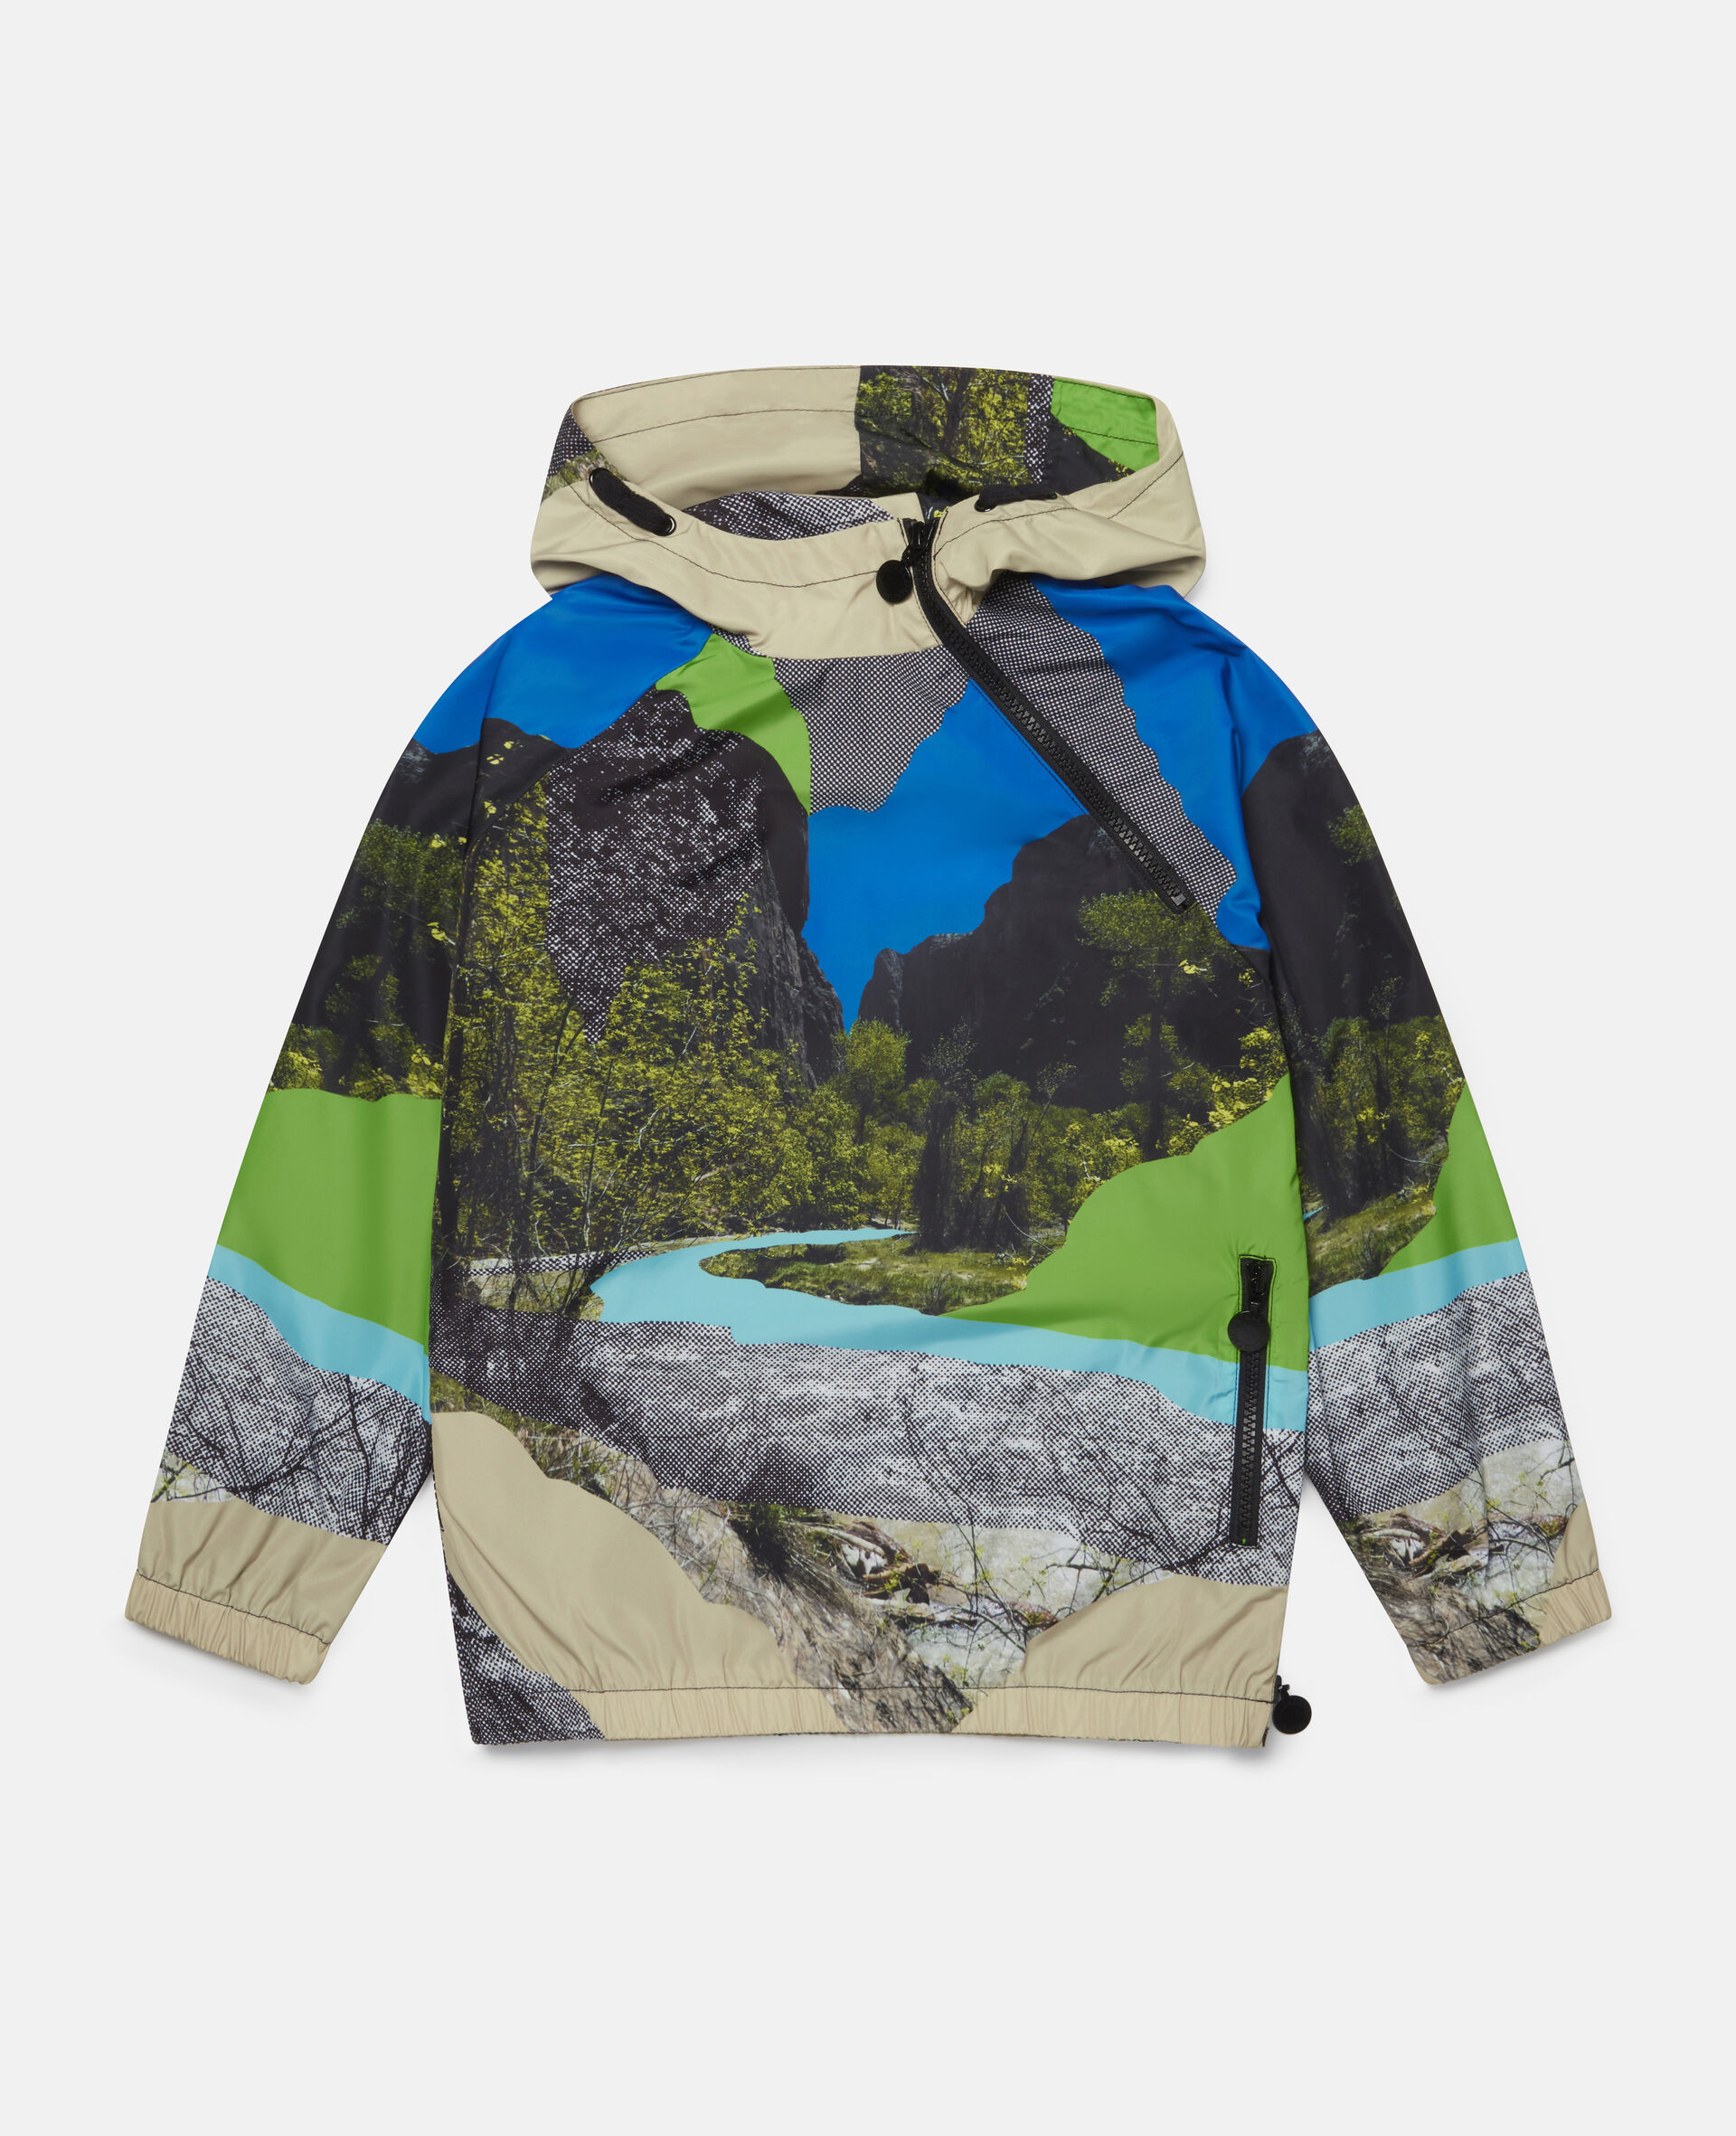 Landscape Hooded Jacket-Multicolour-large